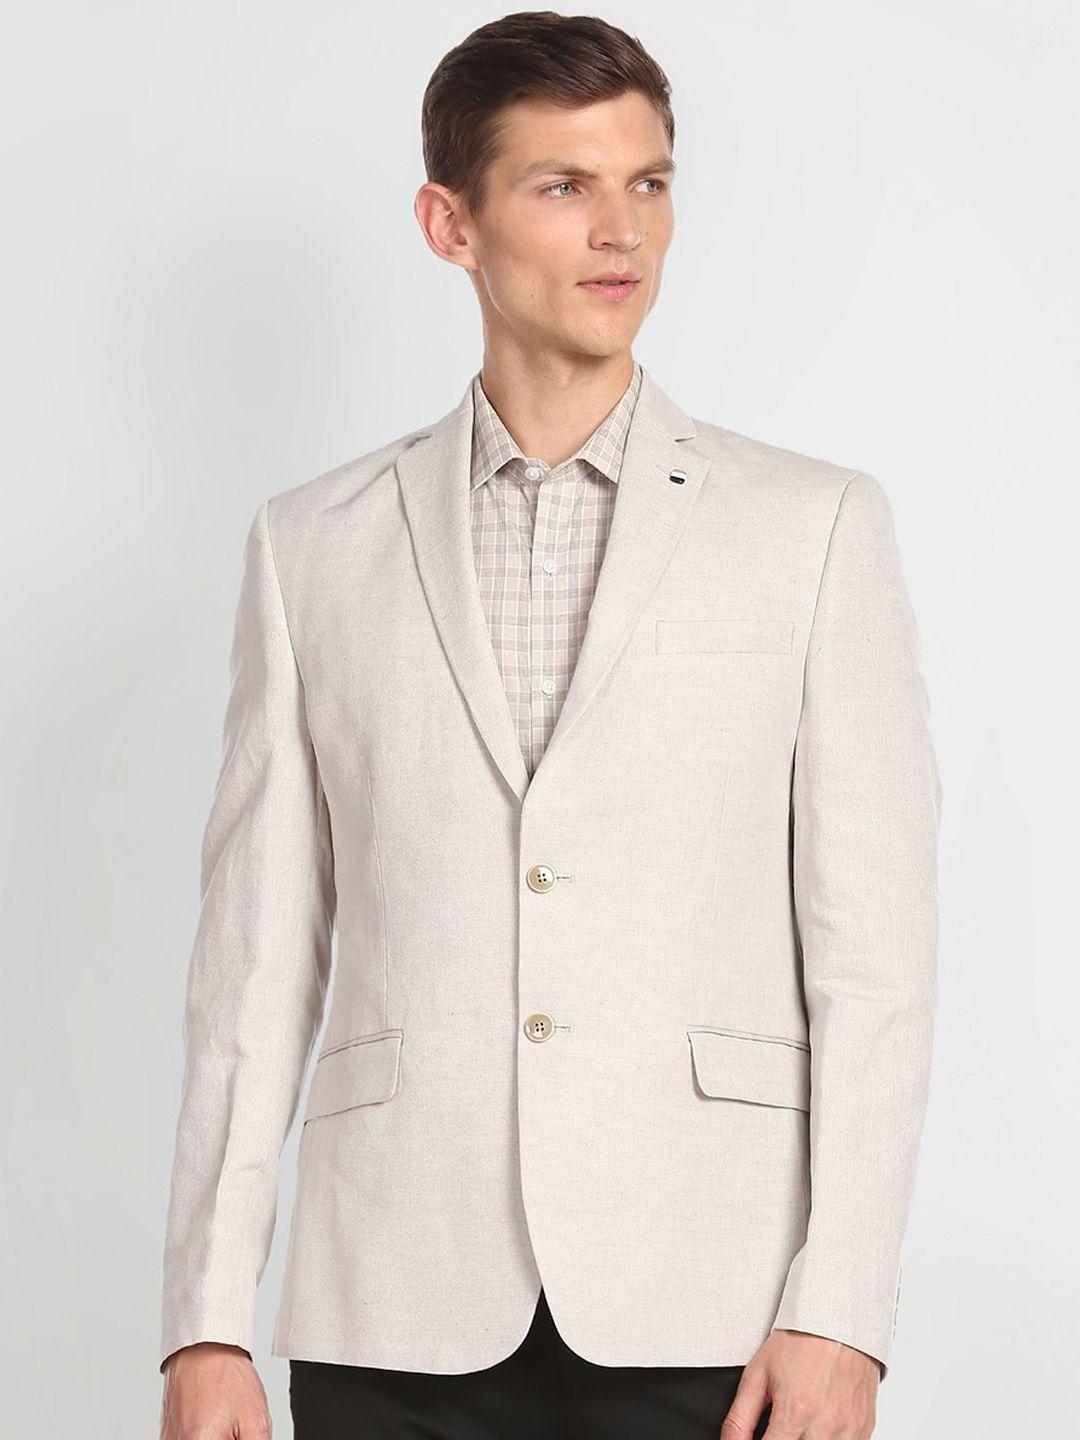 arrow notched lapel collar single-breasted linen cotton formal blazer